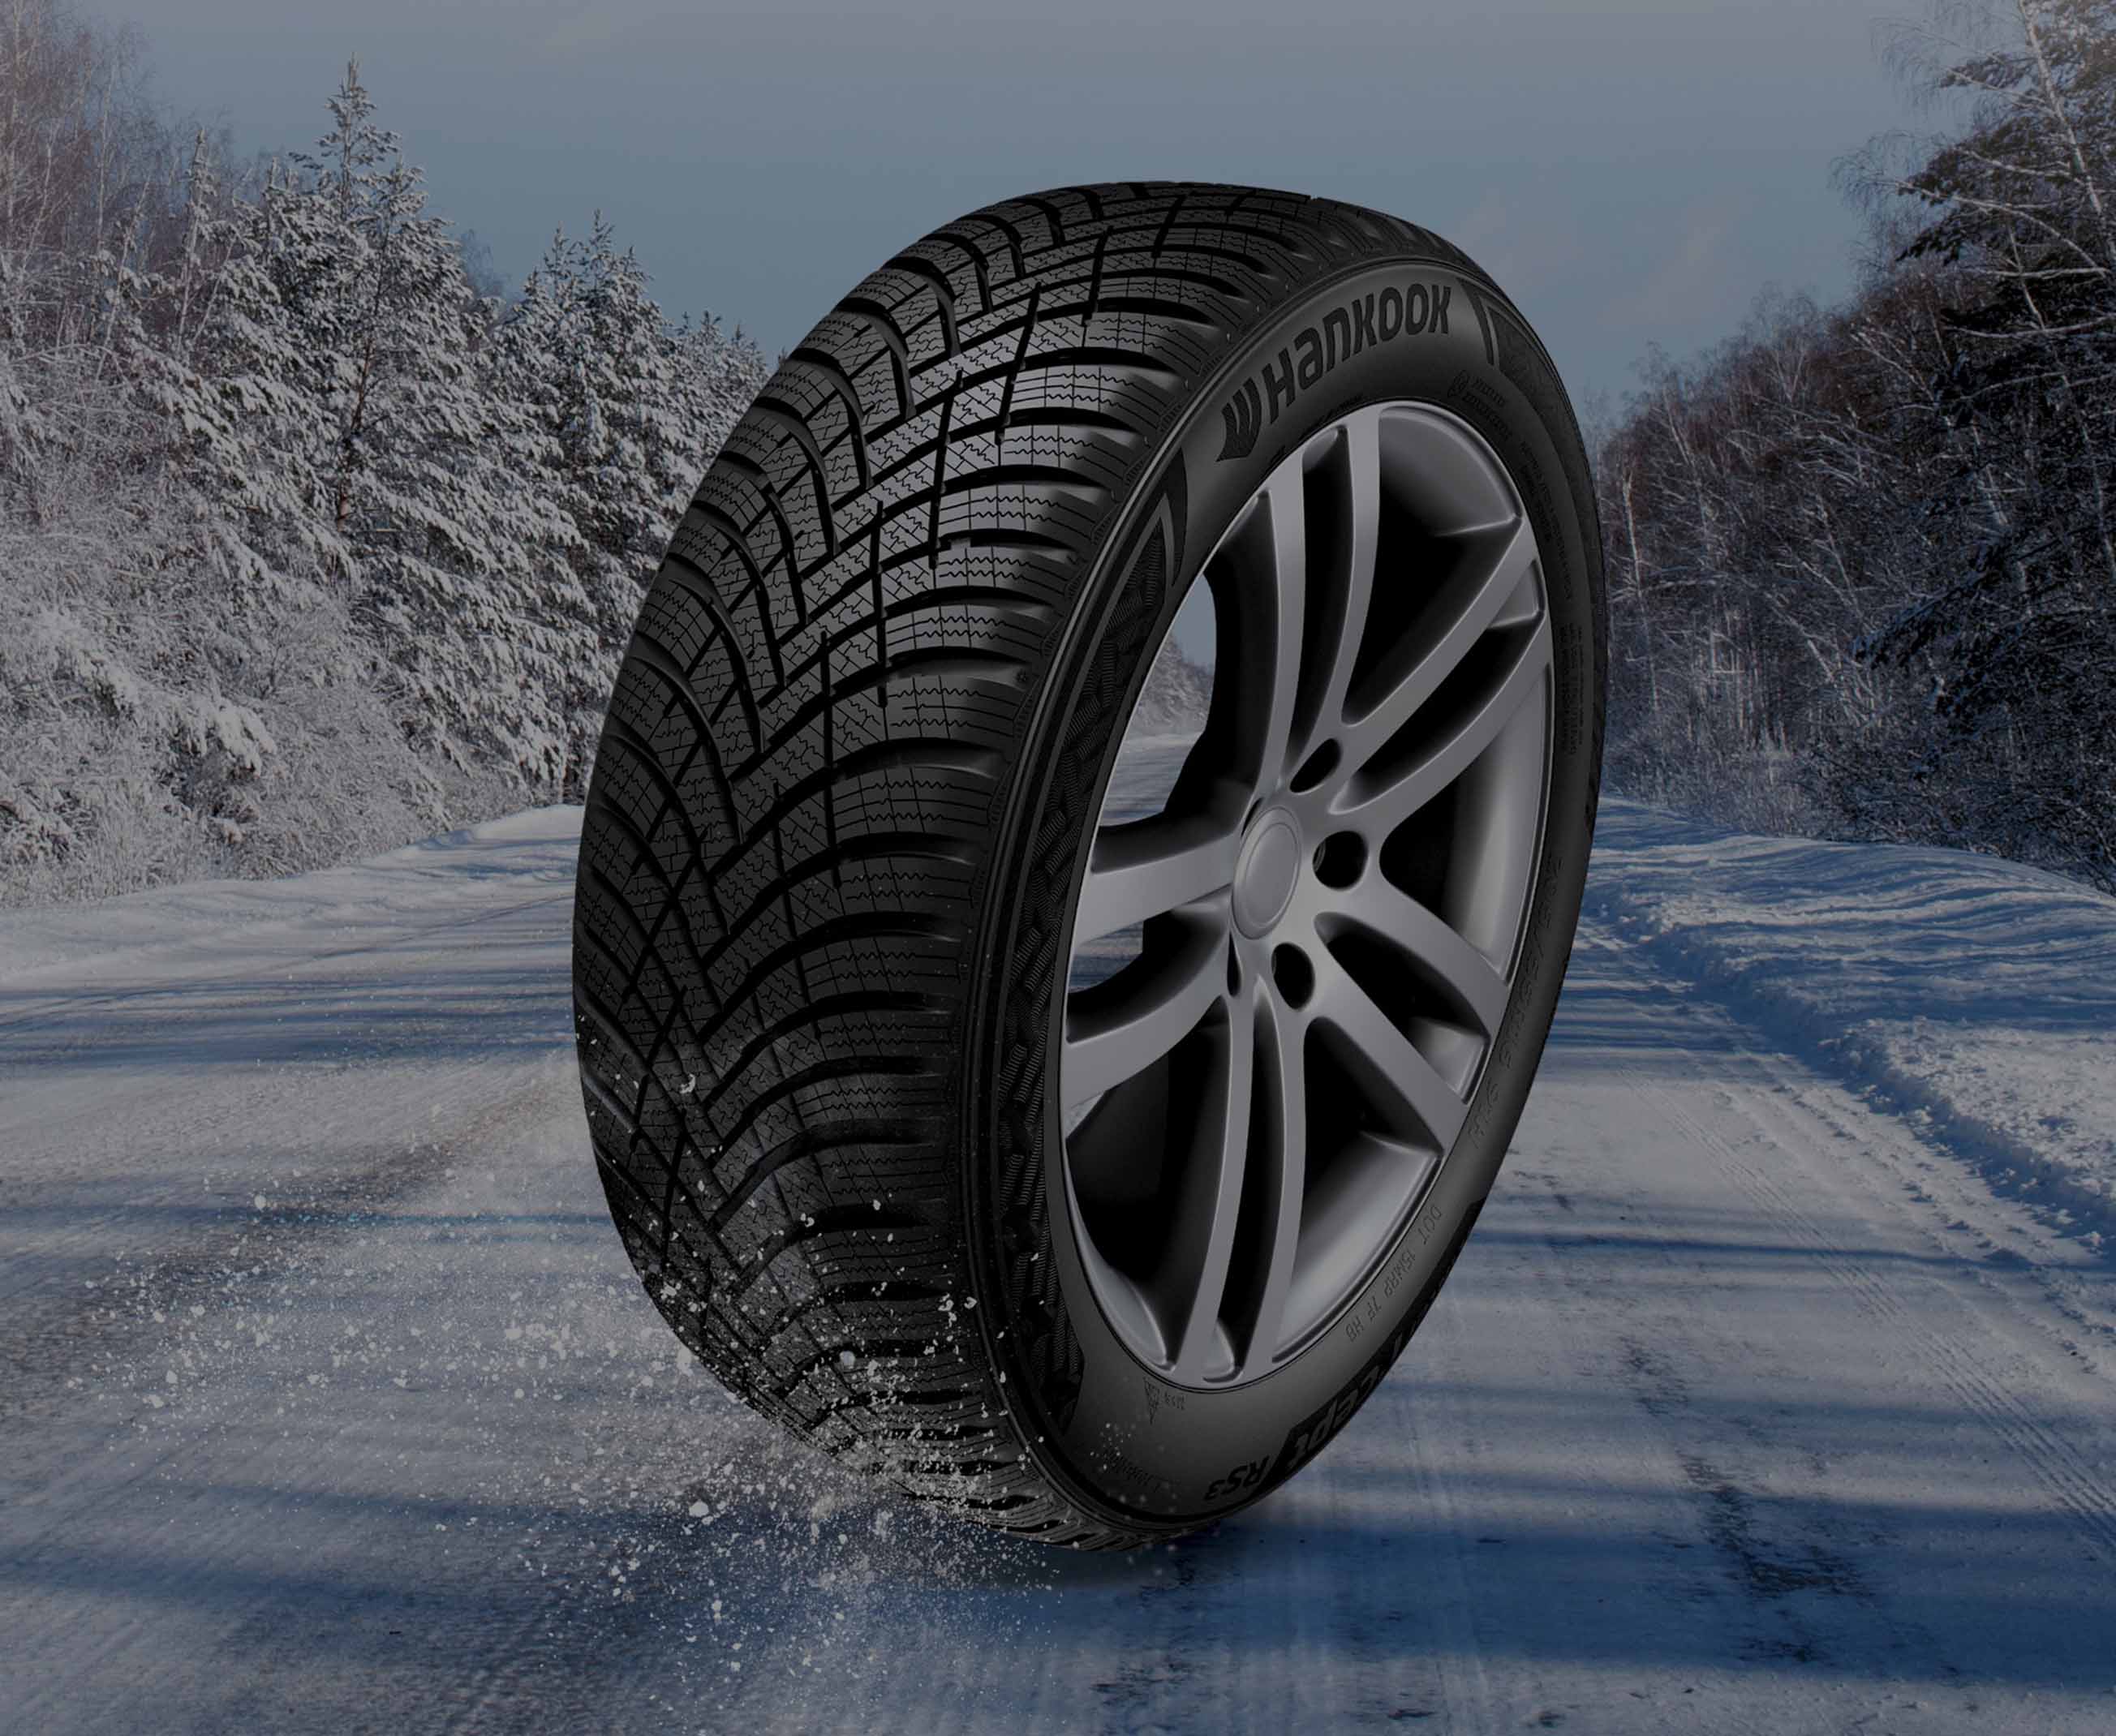 Winter UK | cept - i W462 Tire RS3 Hankook Winter cept i